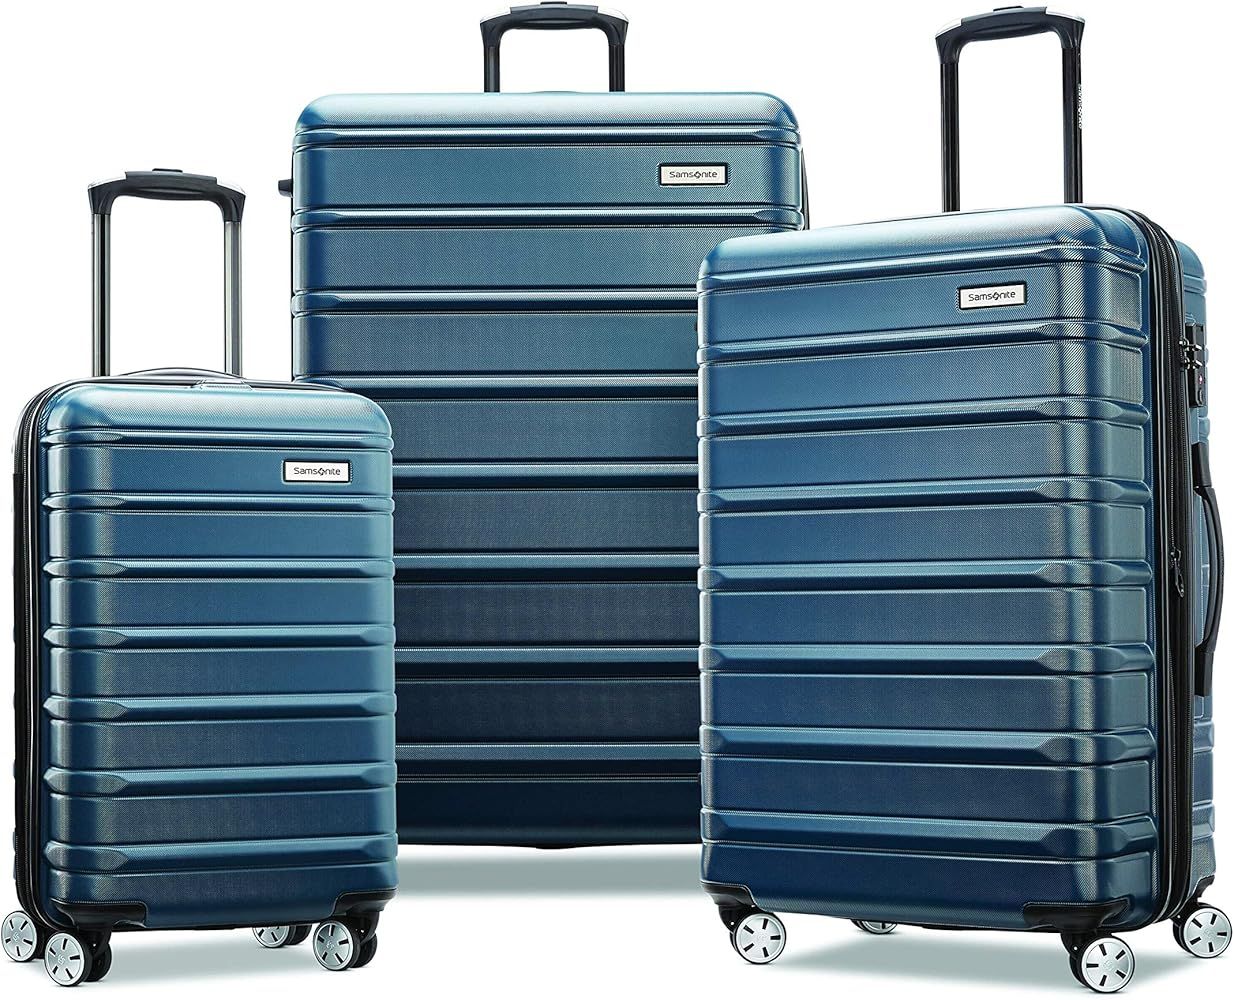 Samsonite Omni 2 Hardside Expandable Luggage with Spinner Wheels, Nova Teal, 3-Piece Set (20/24/2... | Amazon (US)